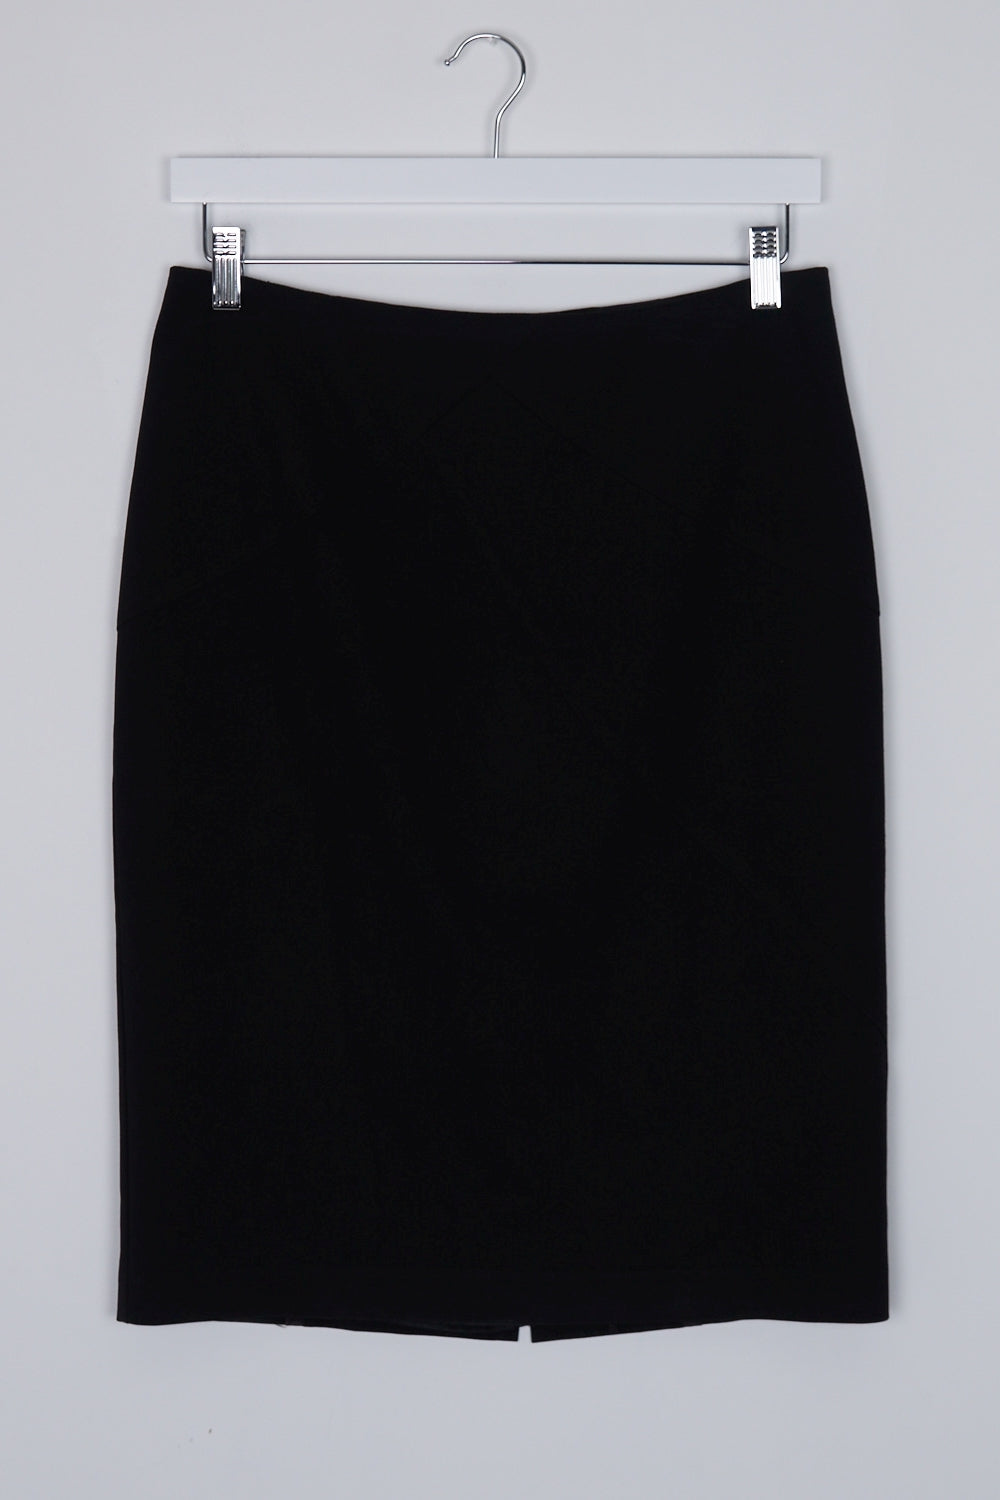 Veronika Maine Black Skirt 10